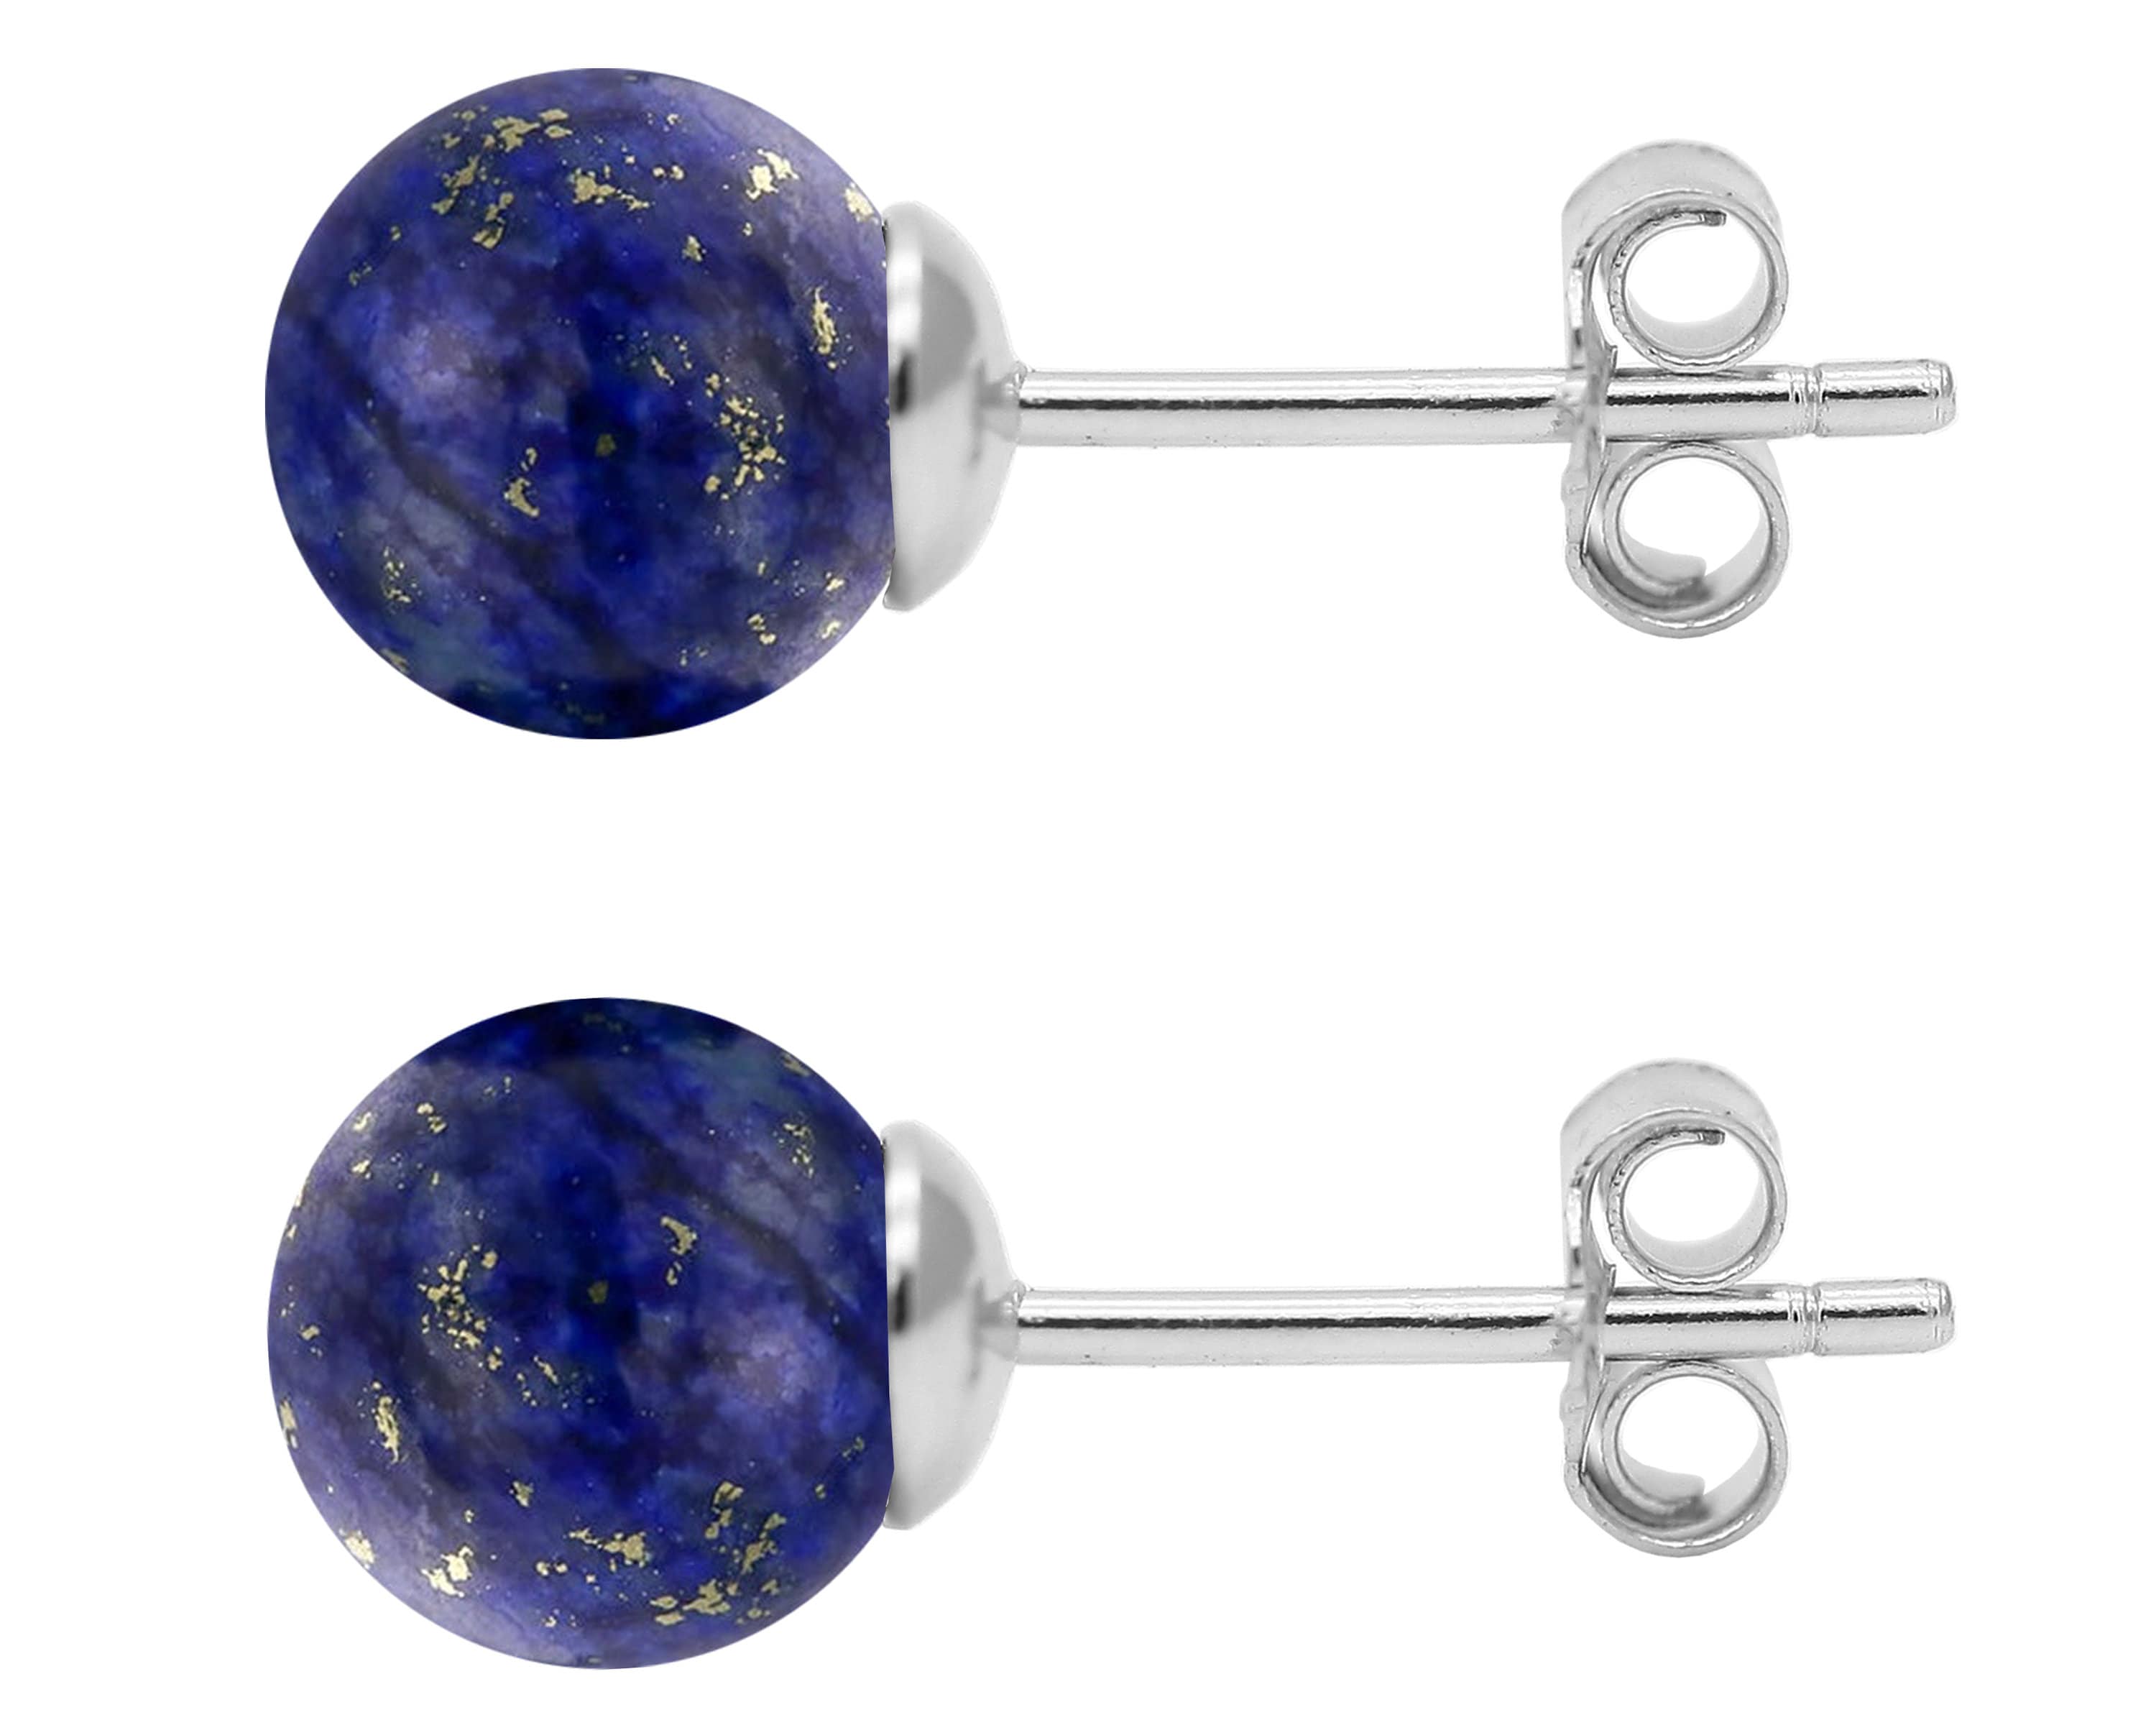 Trustmark 14-20 Gold Filled 10mm Natural Lapis Lazuli Ball Leverback Earrings 